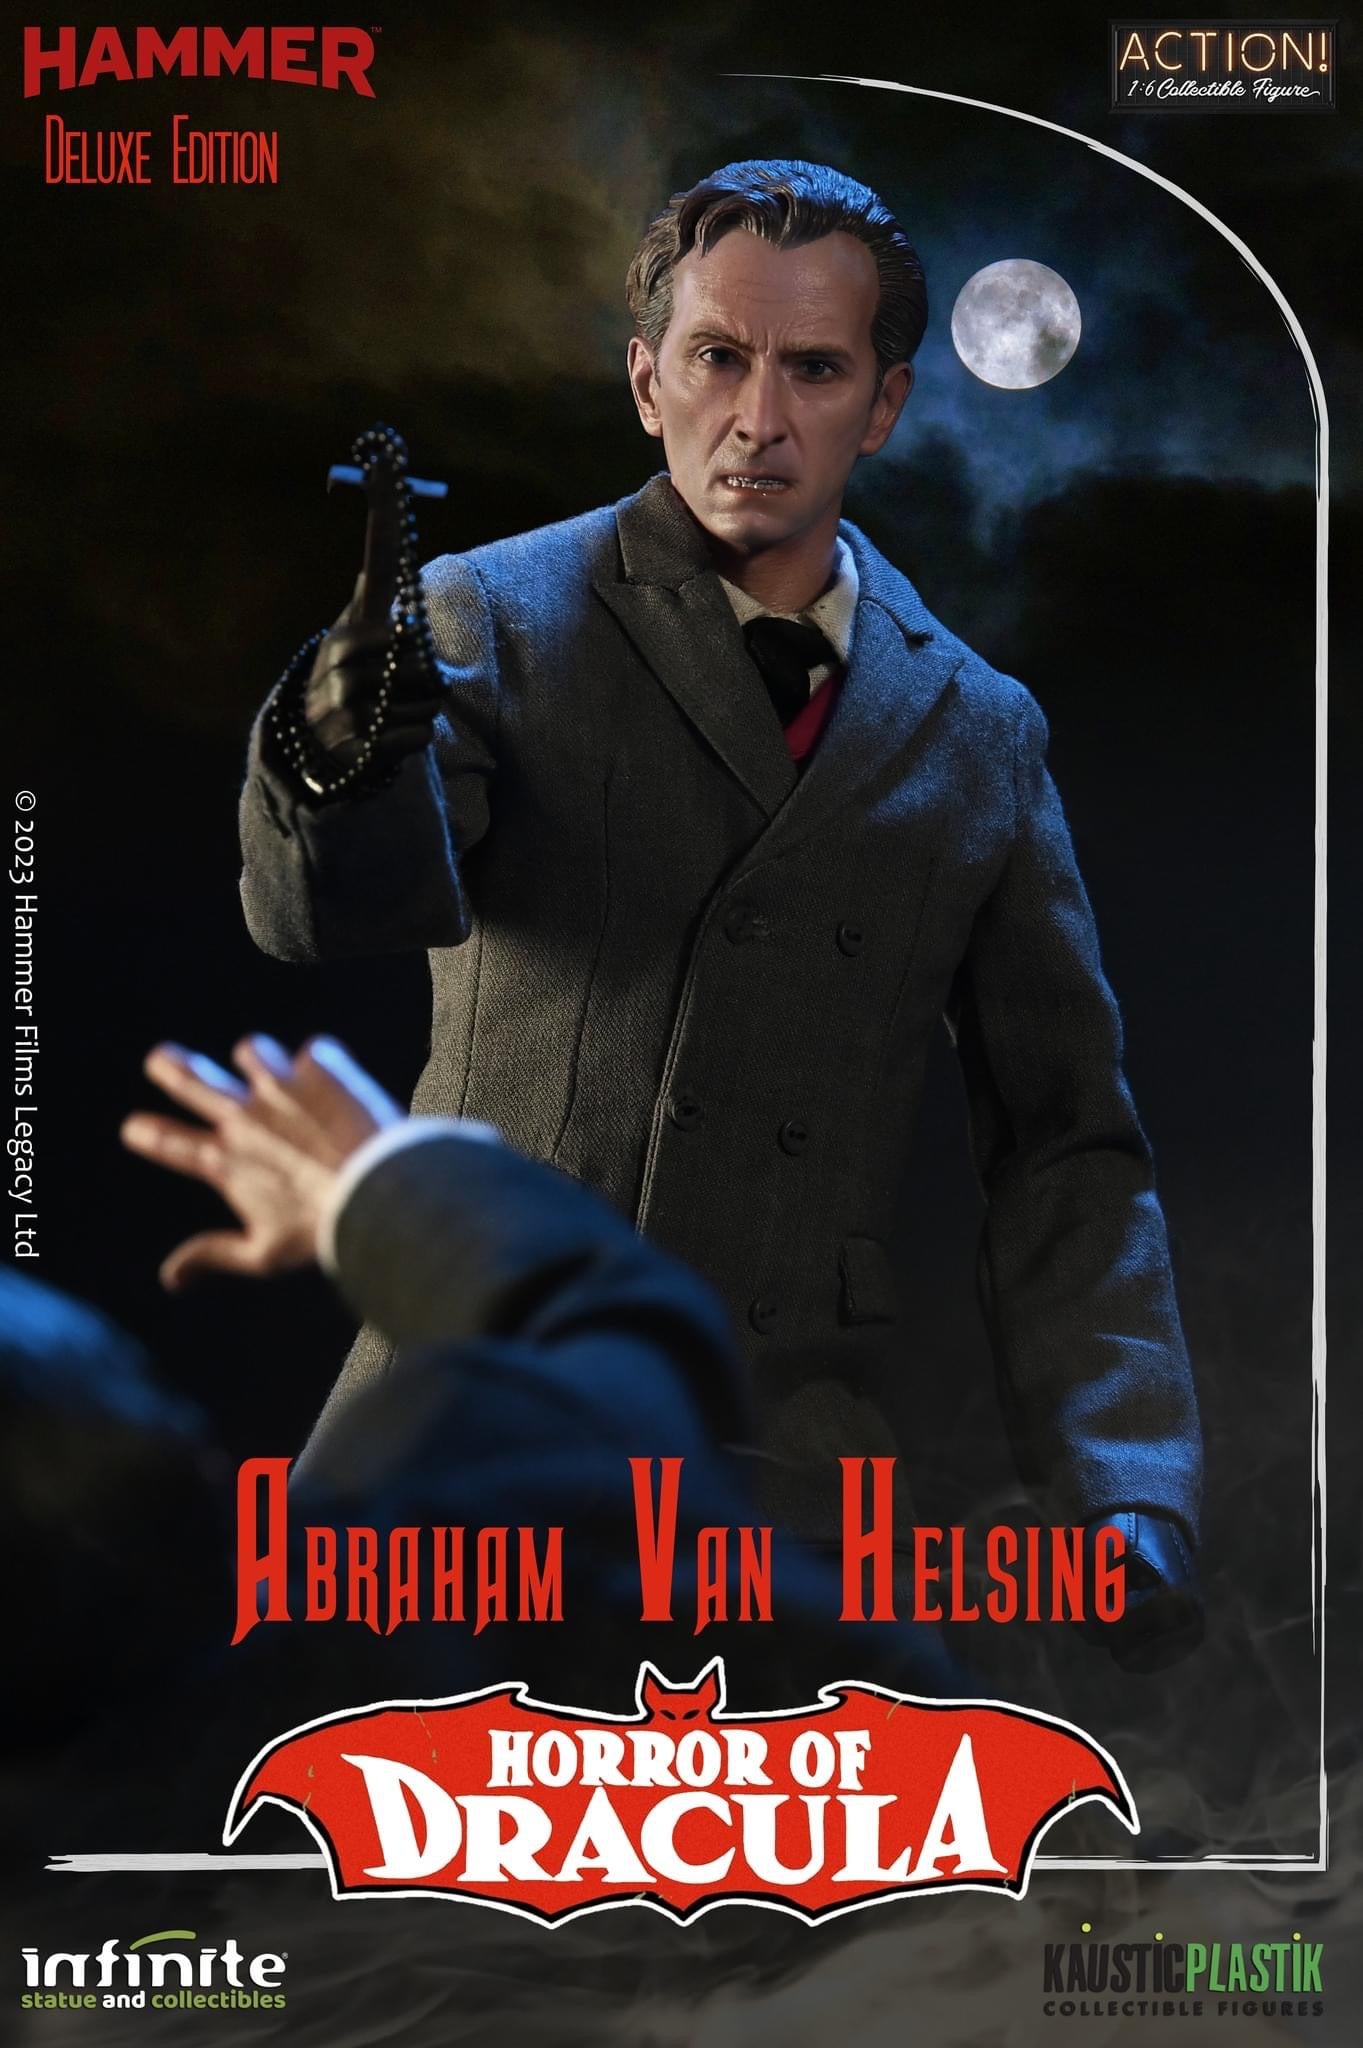 Preventa Figura Van Helsing (2 versiones) - Horror of Dracula marca Kaustic Plastik 91438-39 escala 1/6